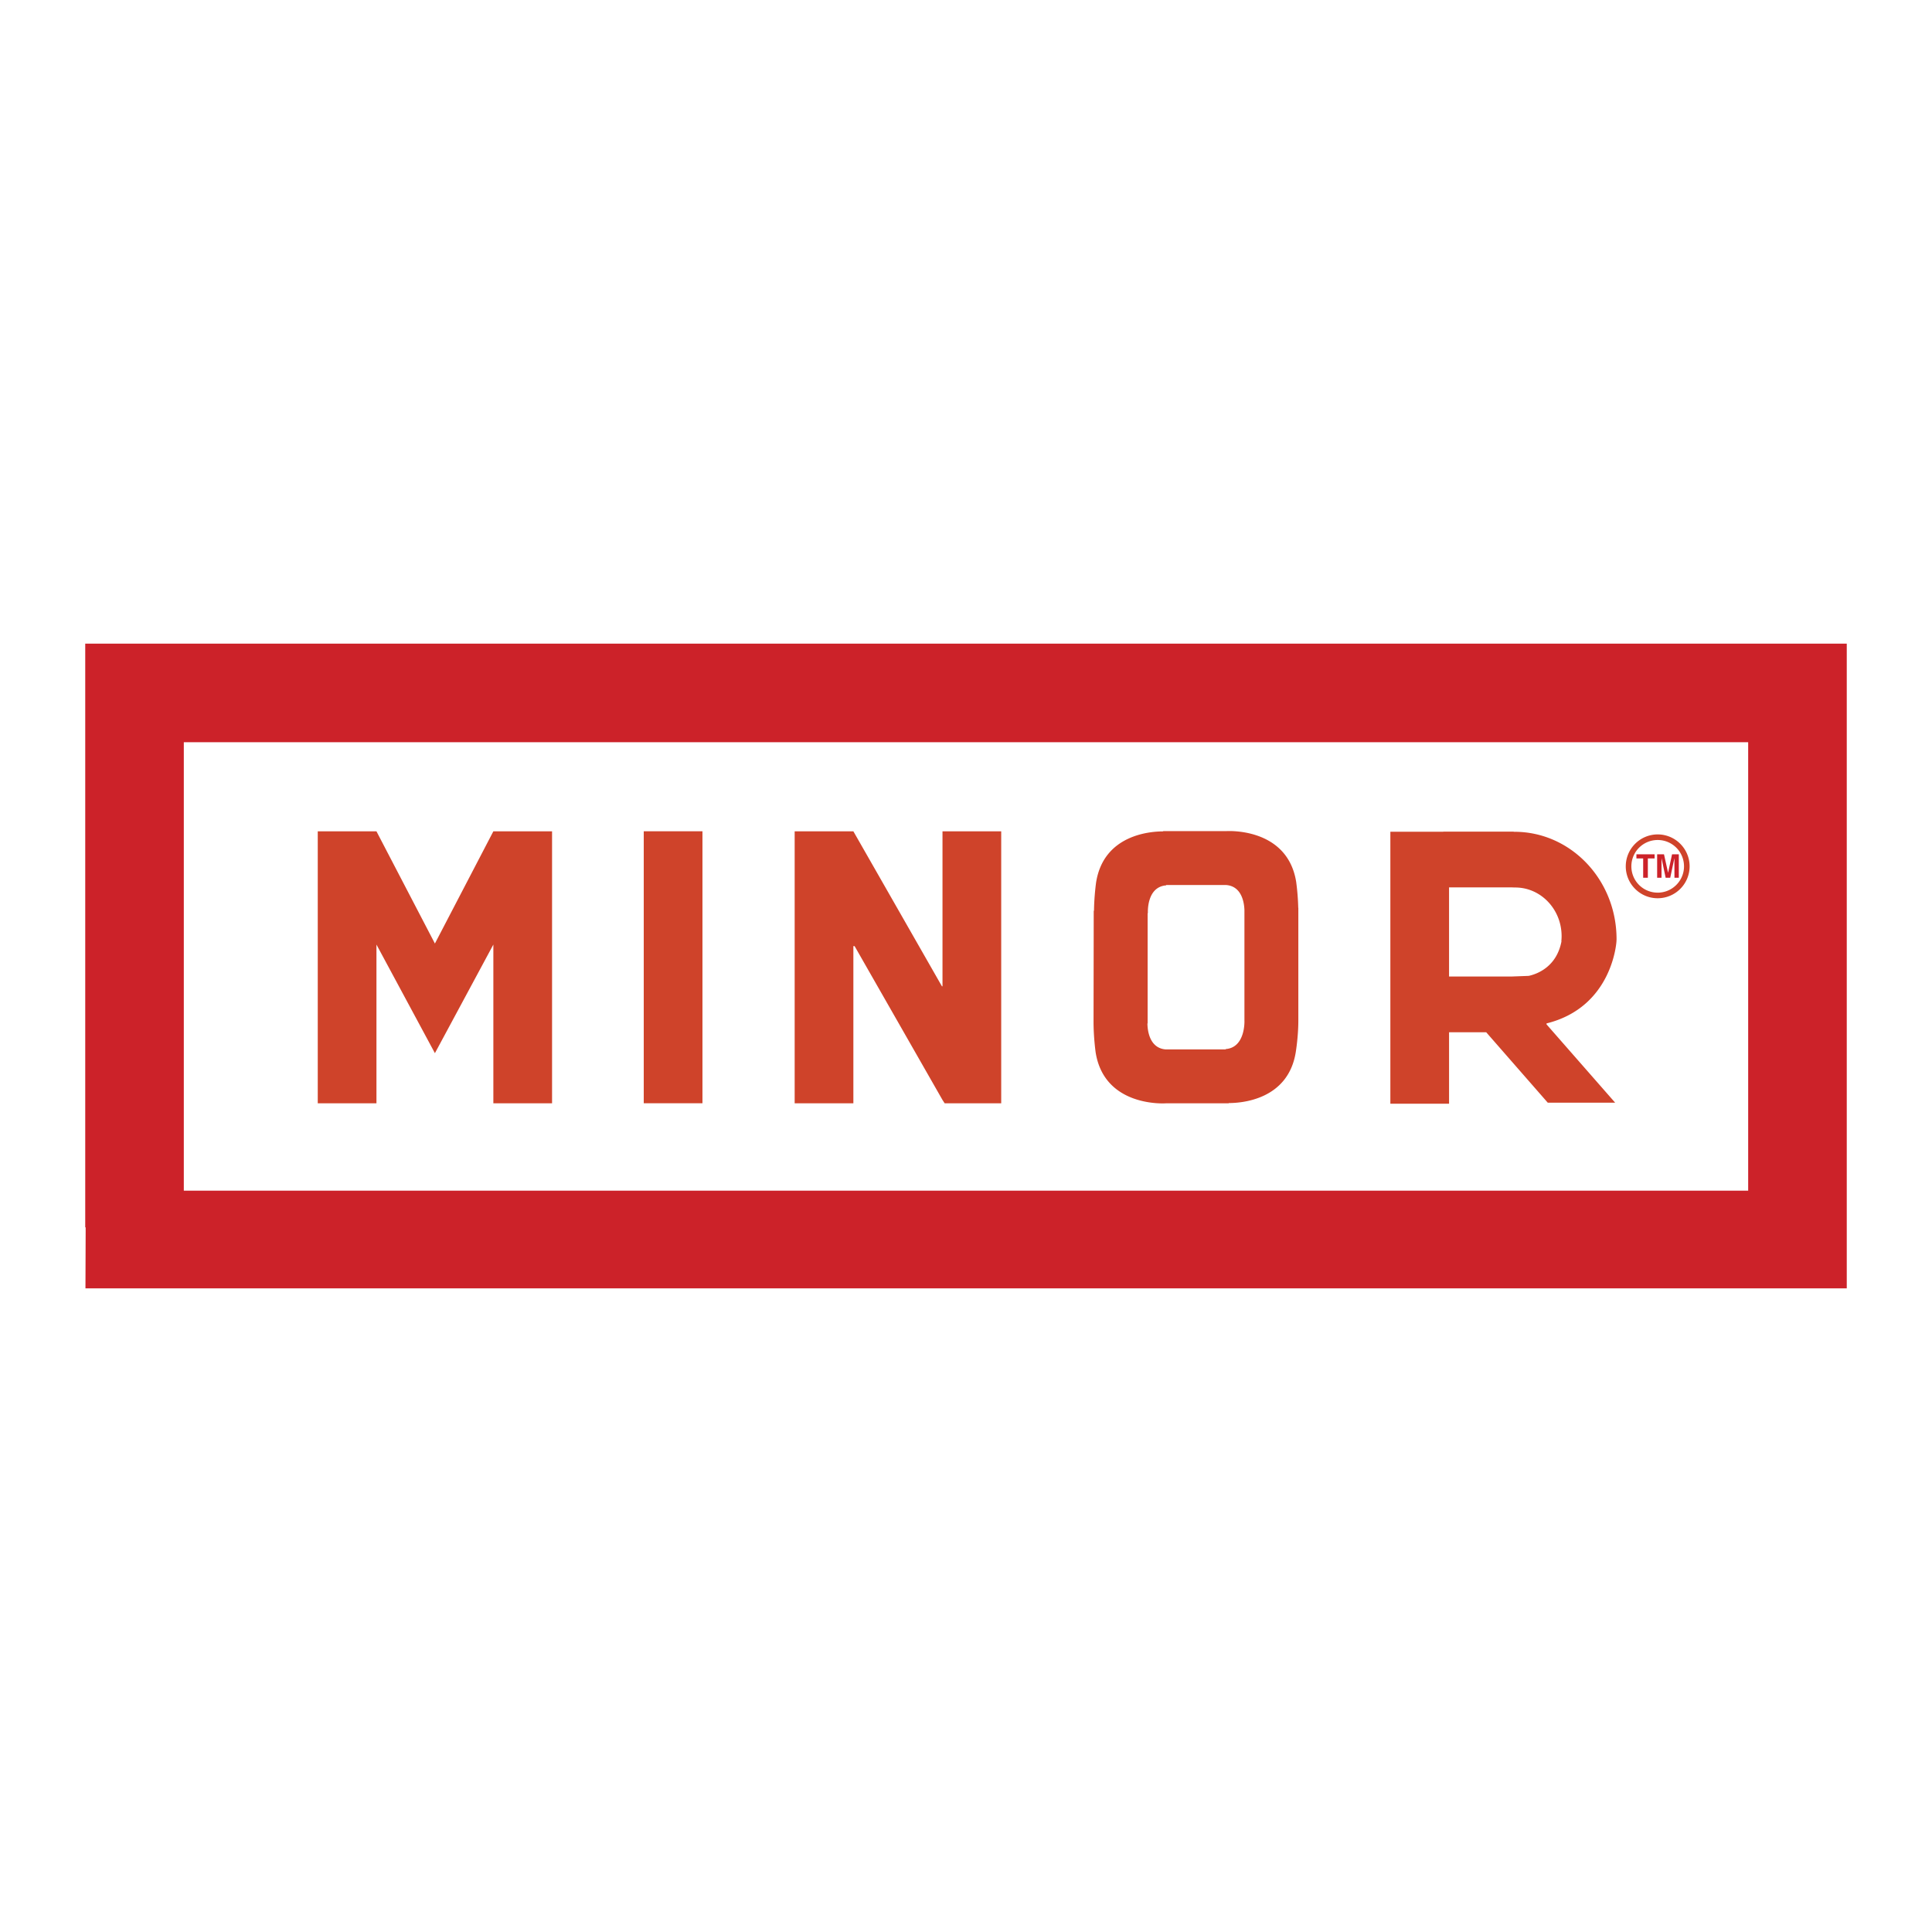 Minor Hotels Blue logo colors